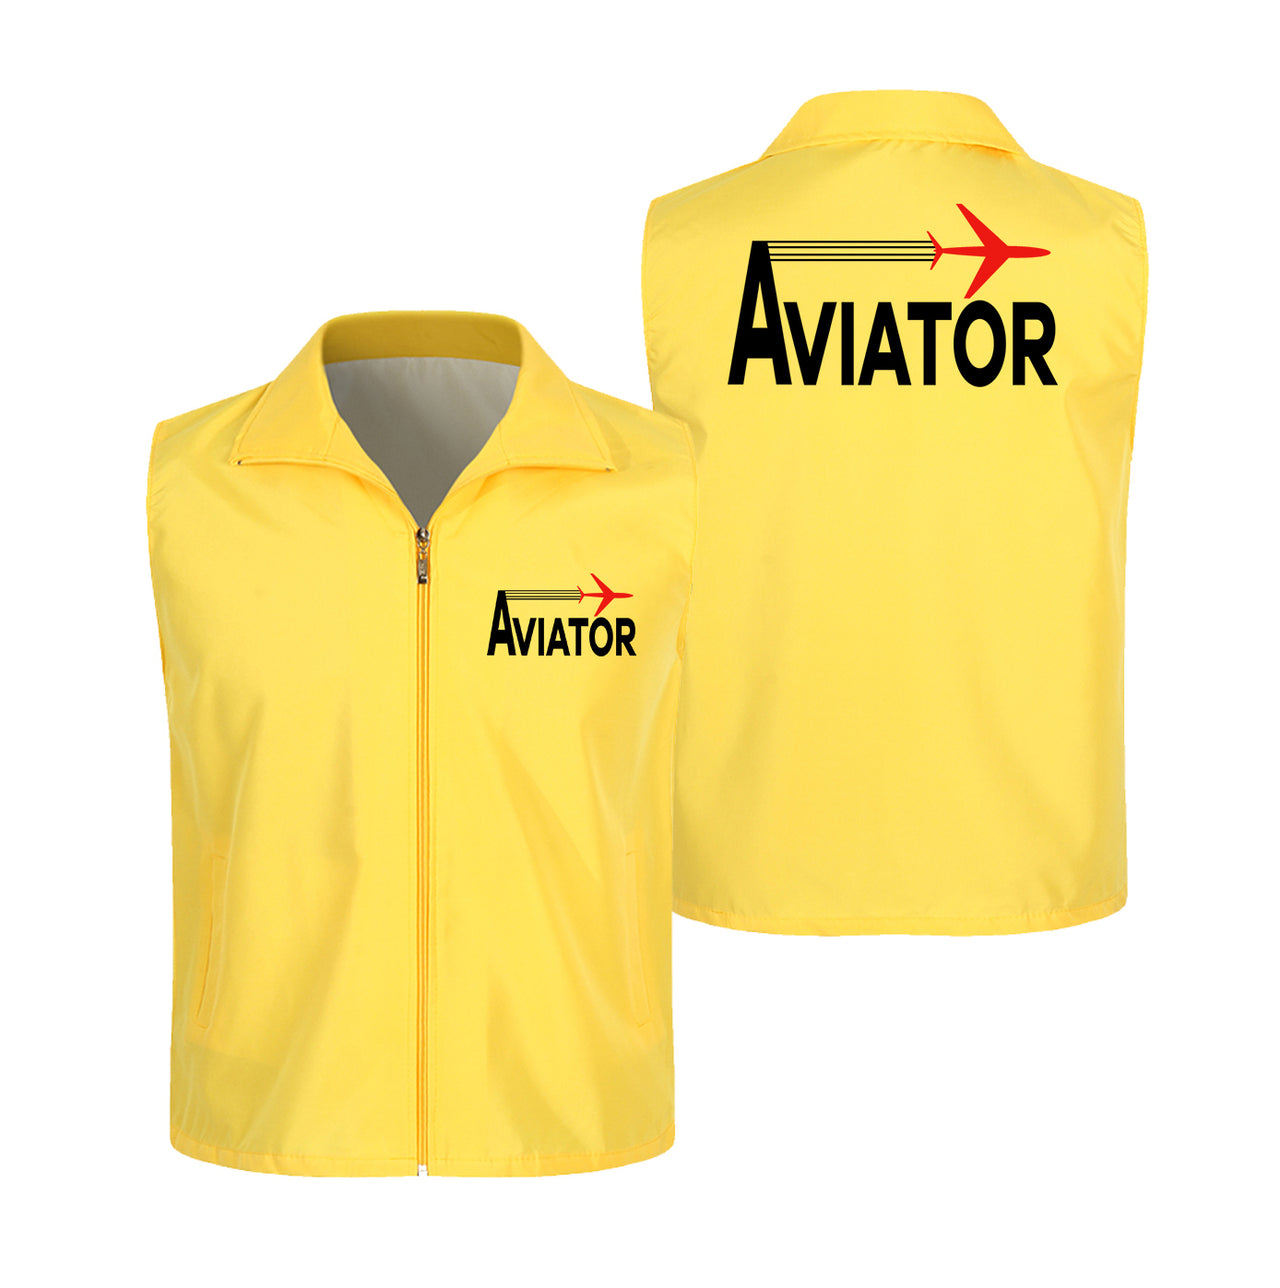 Aviator Designed Thin Style Vests